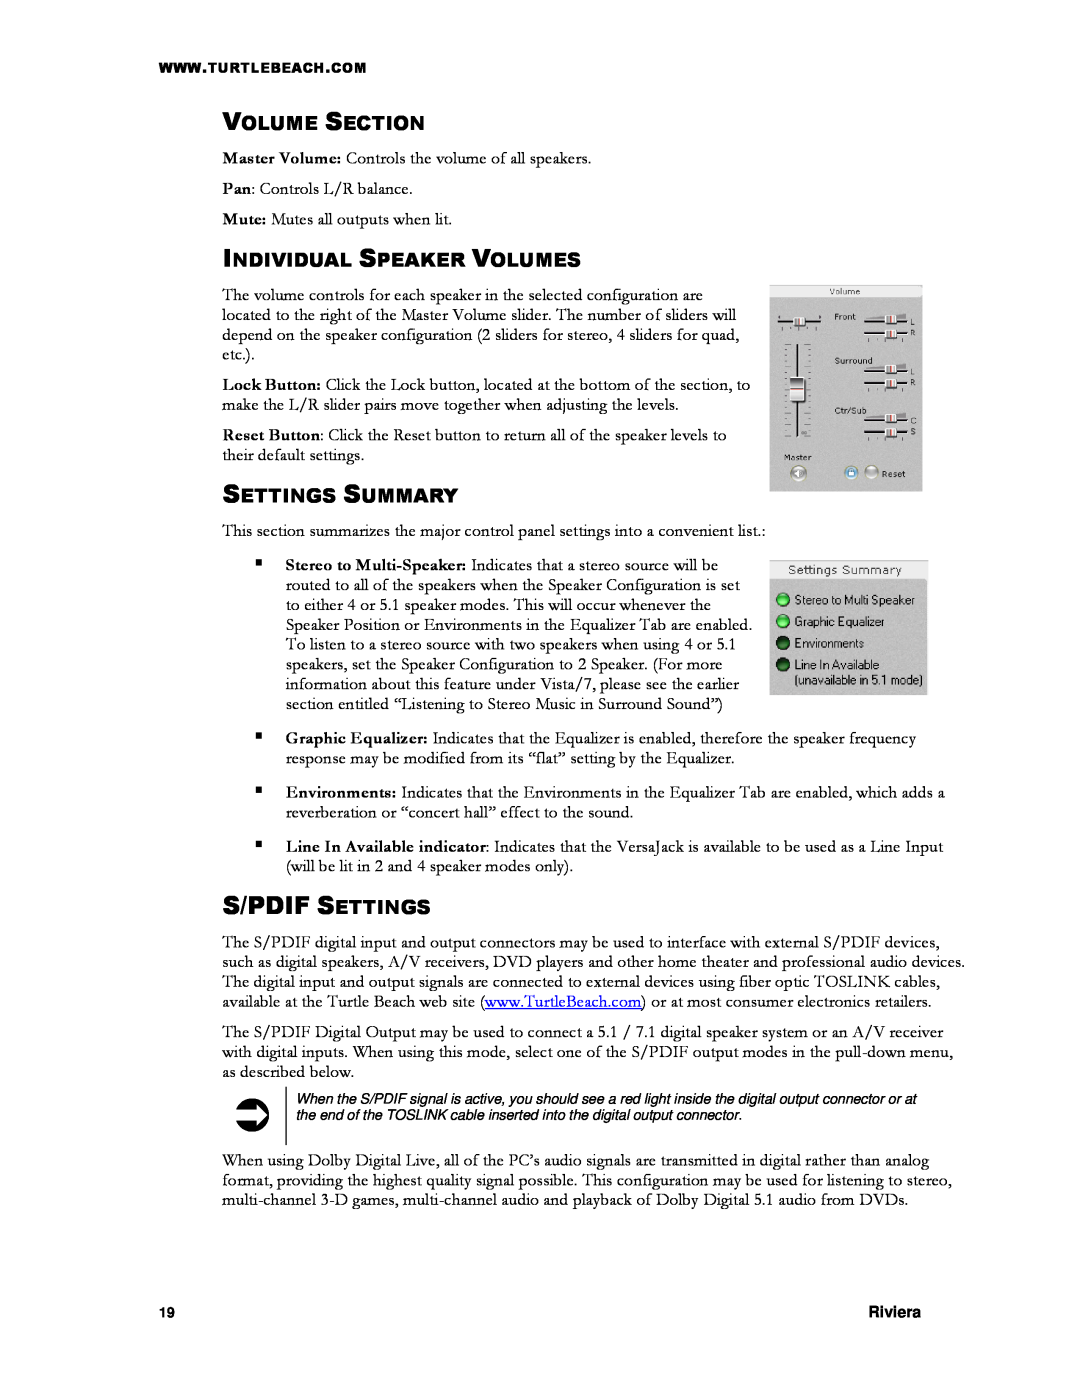 Turtle Beach TB400-3425-01 manual Volume Section, Individual Speaker Volumes, Settings Summary, S/Pdif Settings 